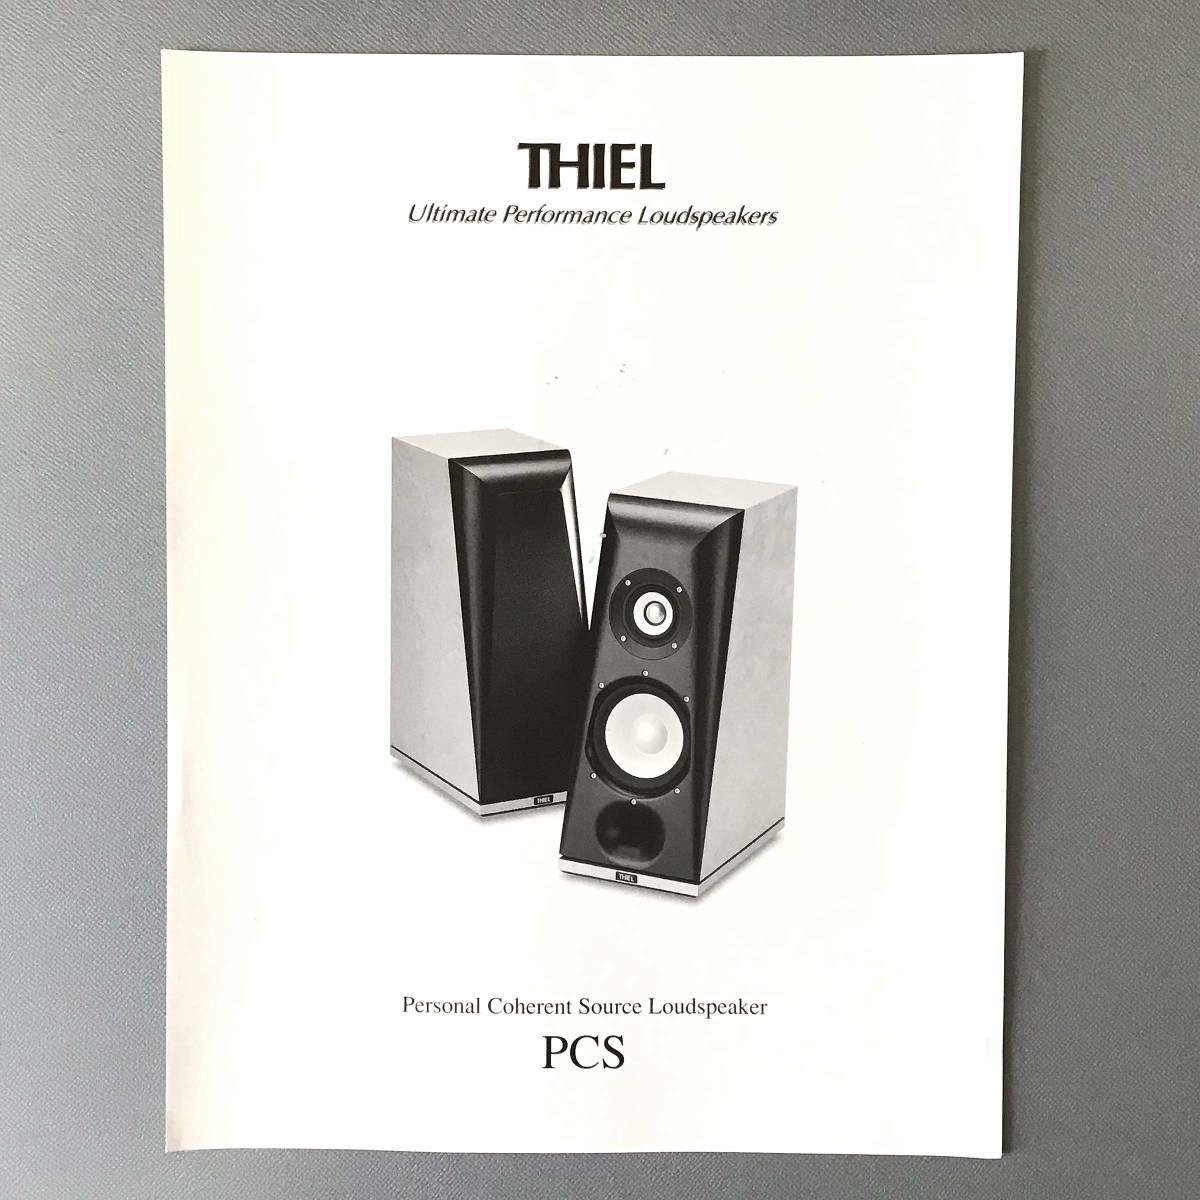 CL カタログ THIEL ティール 安全 Ultimate Performance Loudspeakers 3ウェイスピーカー 2000年 98%OFF PCS